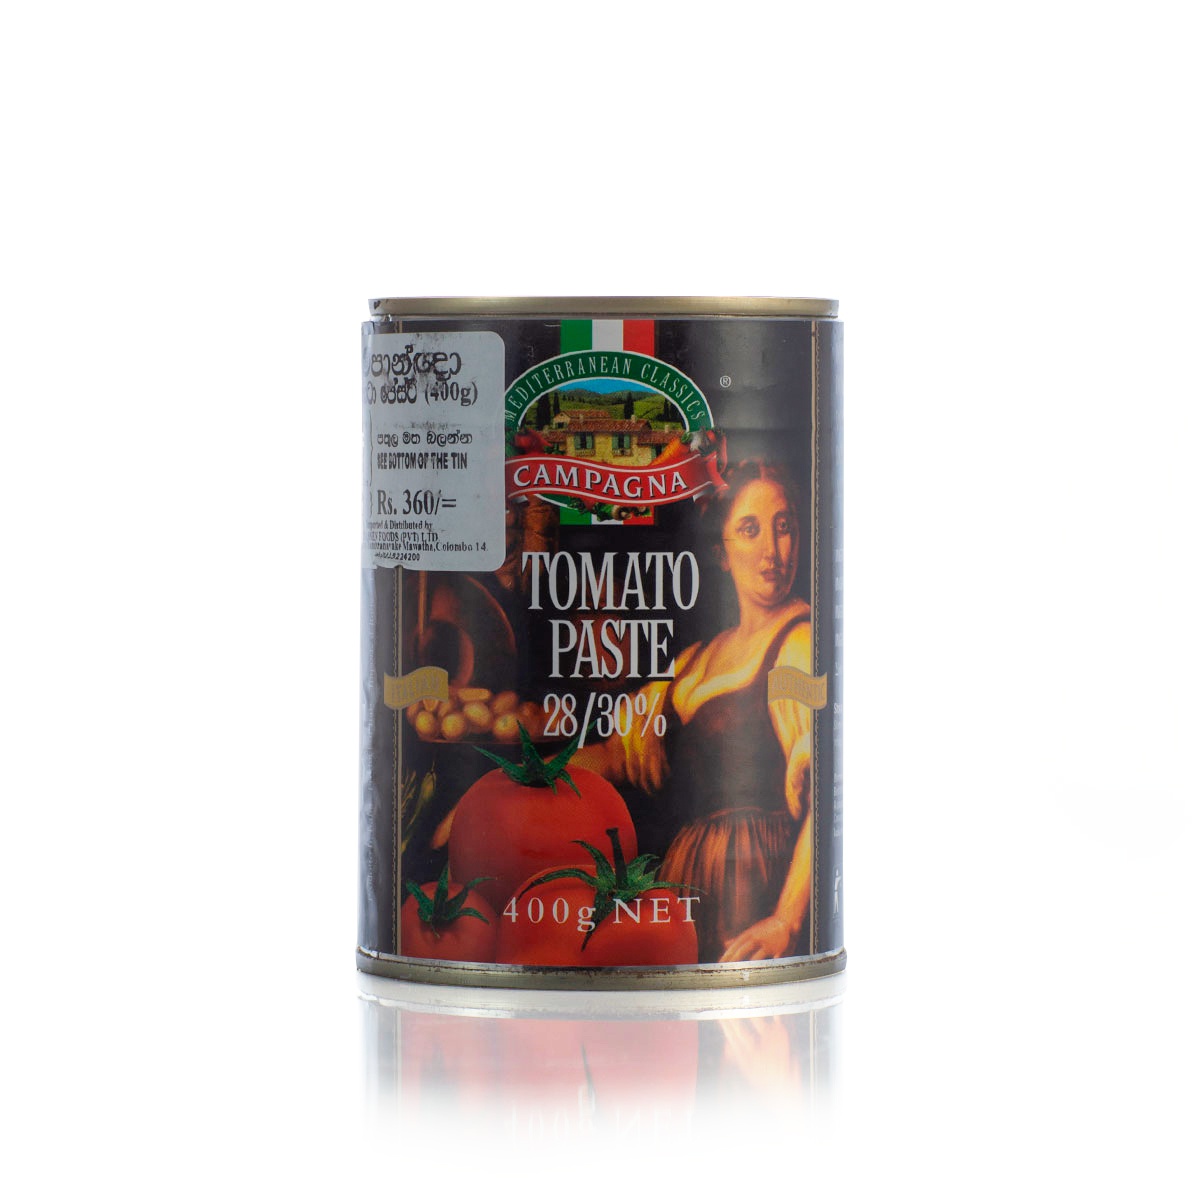 Campagna Tomato Paste 400G - CAMPAGNA - Processed/ Preserved Vegetables - in Sri Lanka